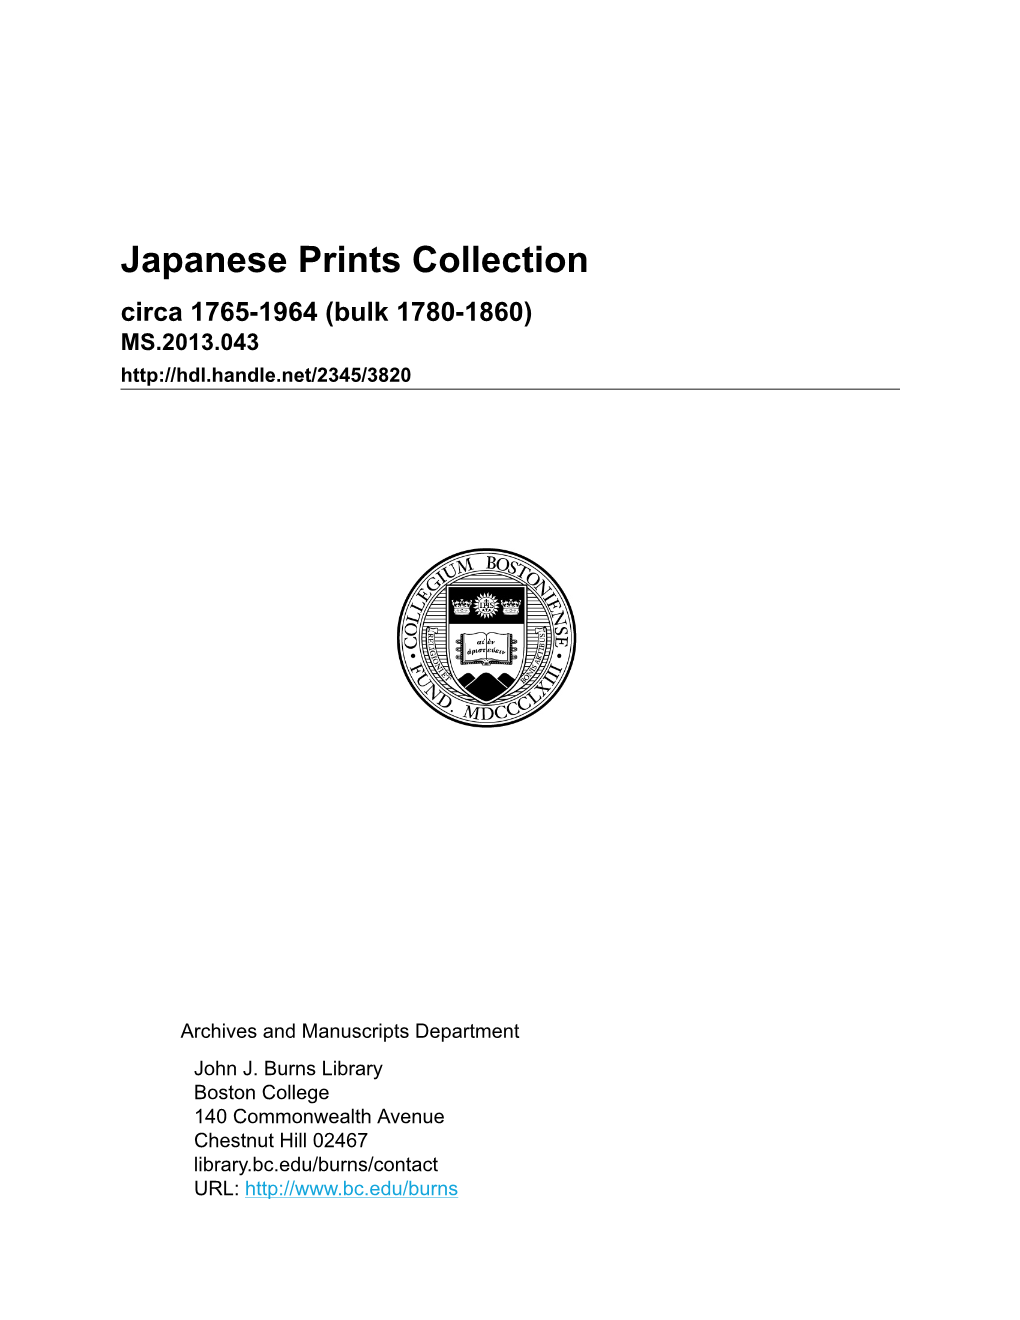 Japanese Prints Collection Circa 1765-1964 (Bulk 1780-1860) MS.2013.043